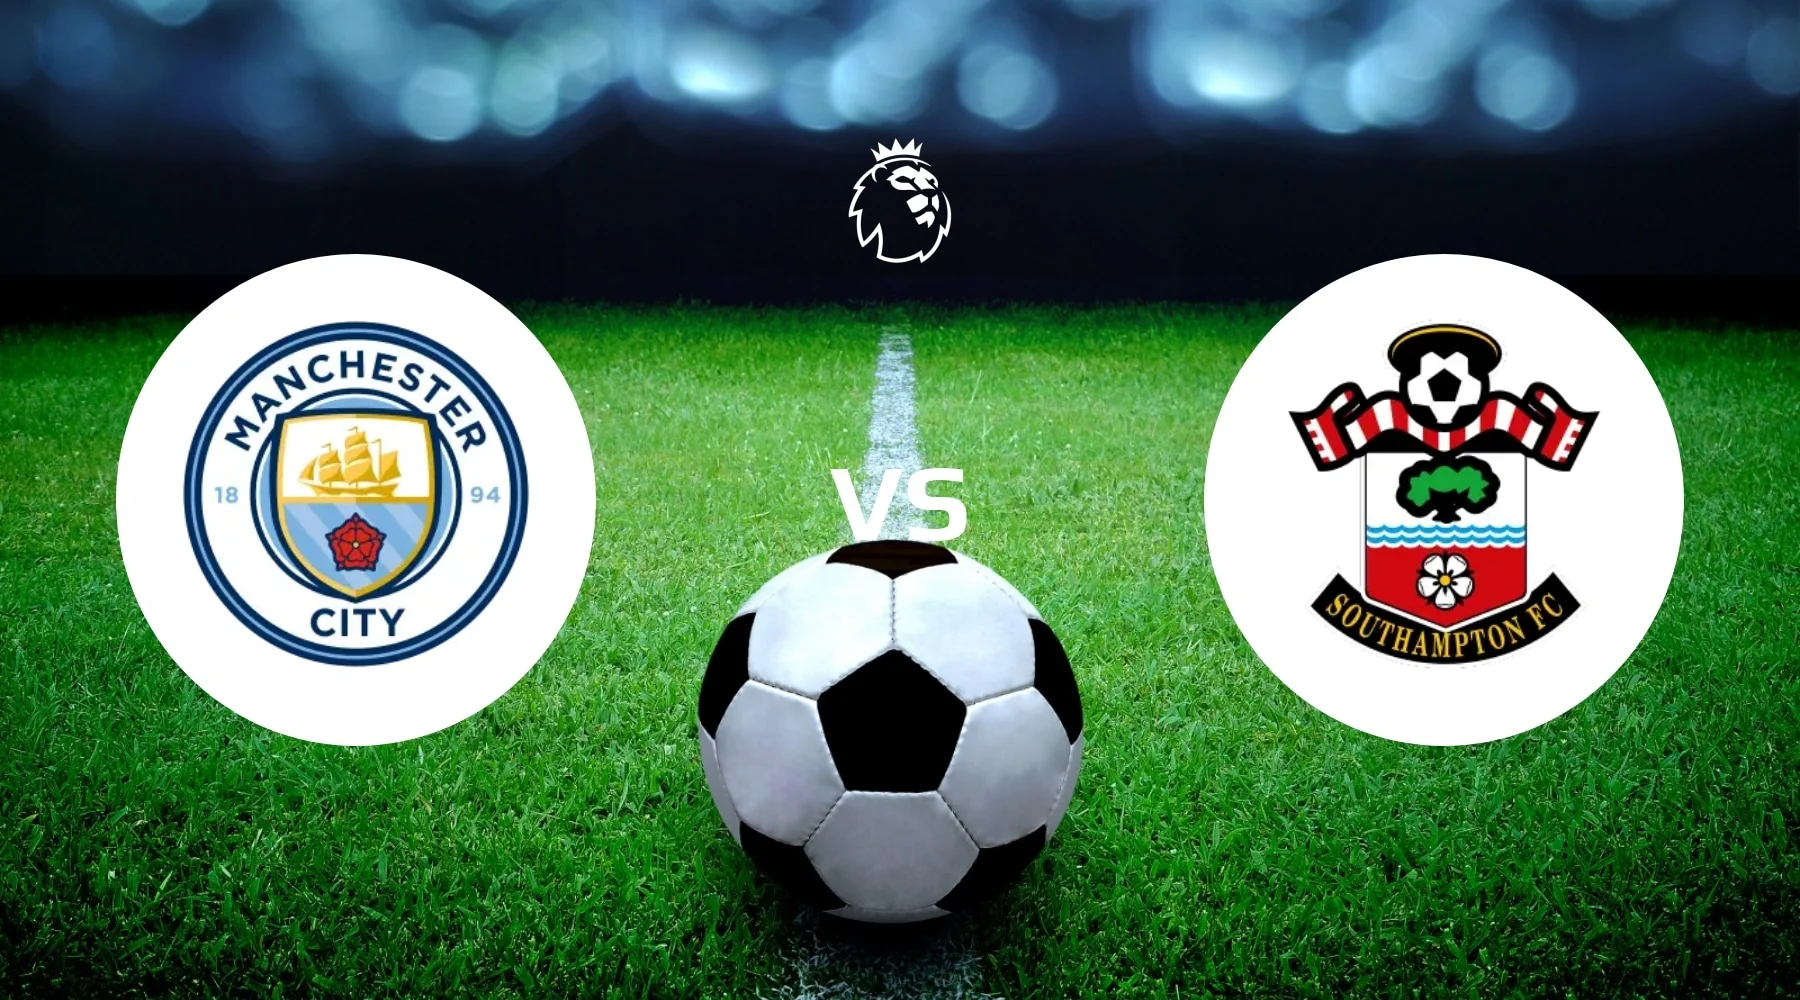 Manchester City vs Southampton Betting Tips & Predictions